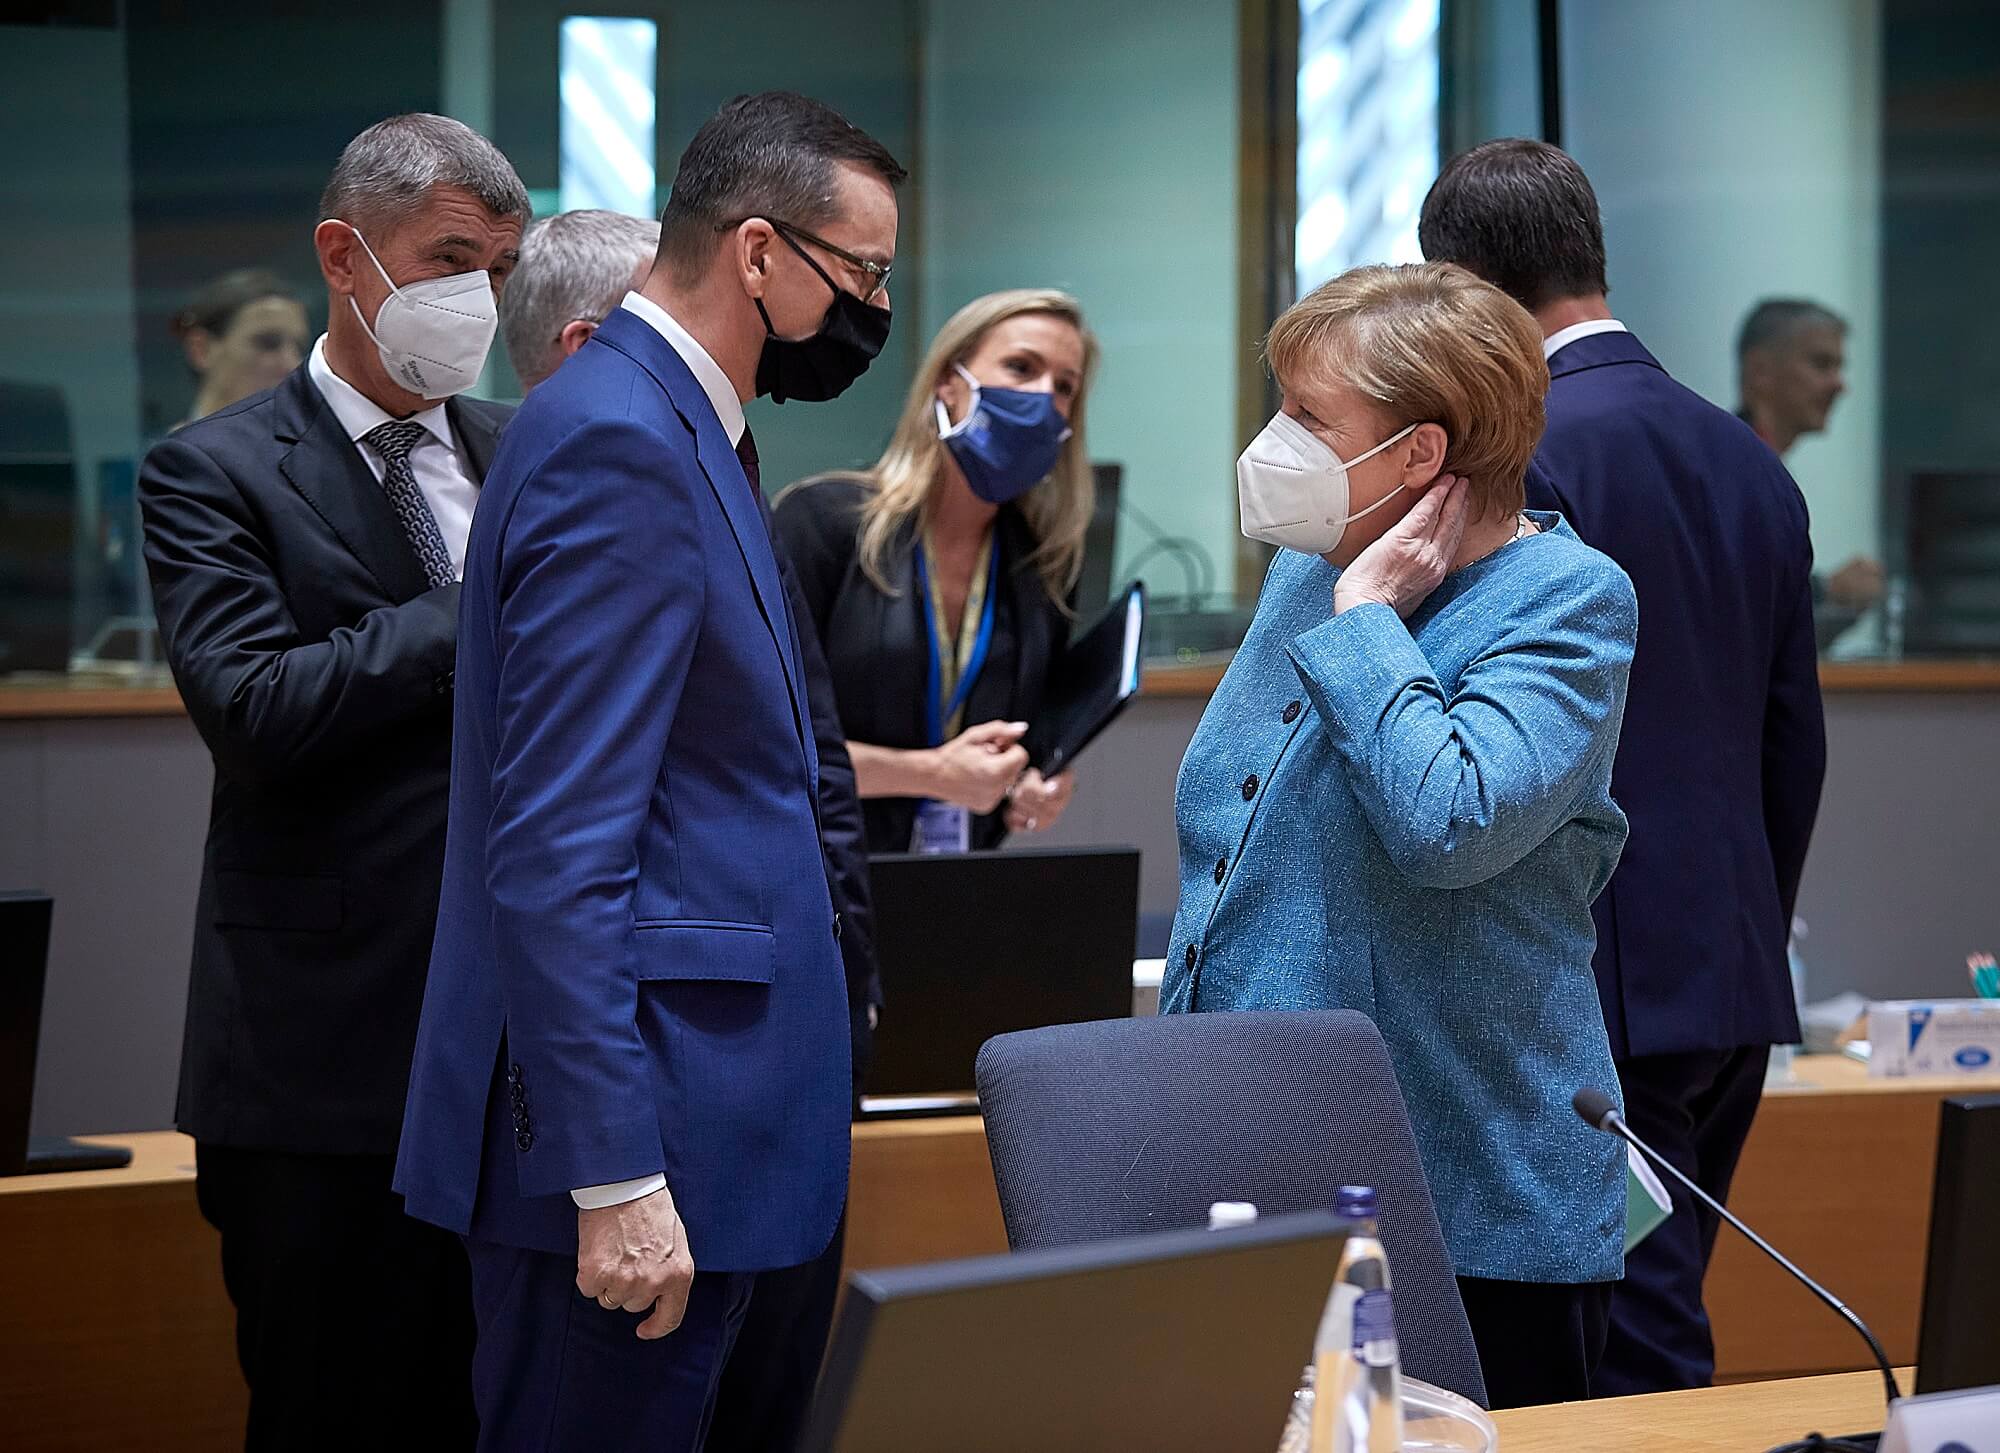 Bachrynowski- Polish Prime Minister Mateusz Morawiecki with German Federal Chancellor Angela Merkel in 2020. European Council